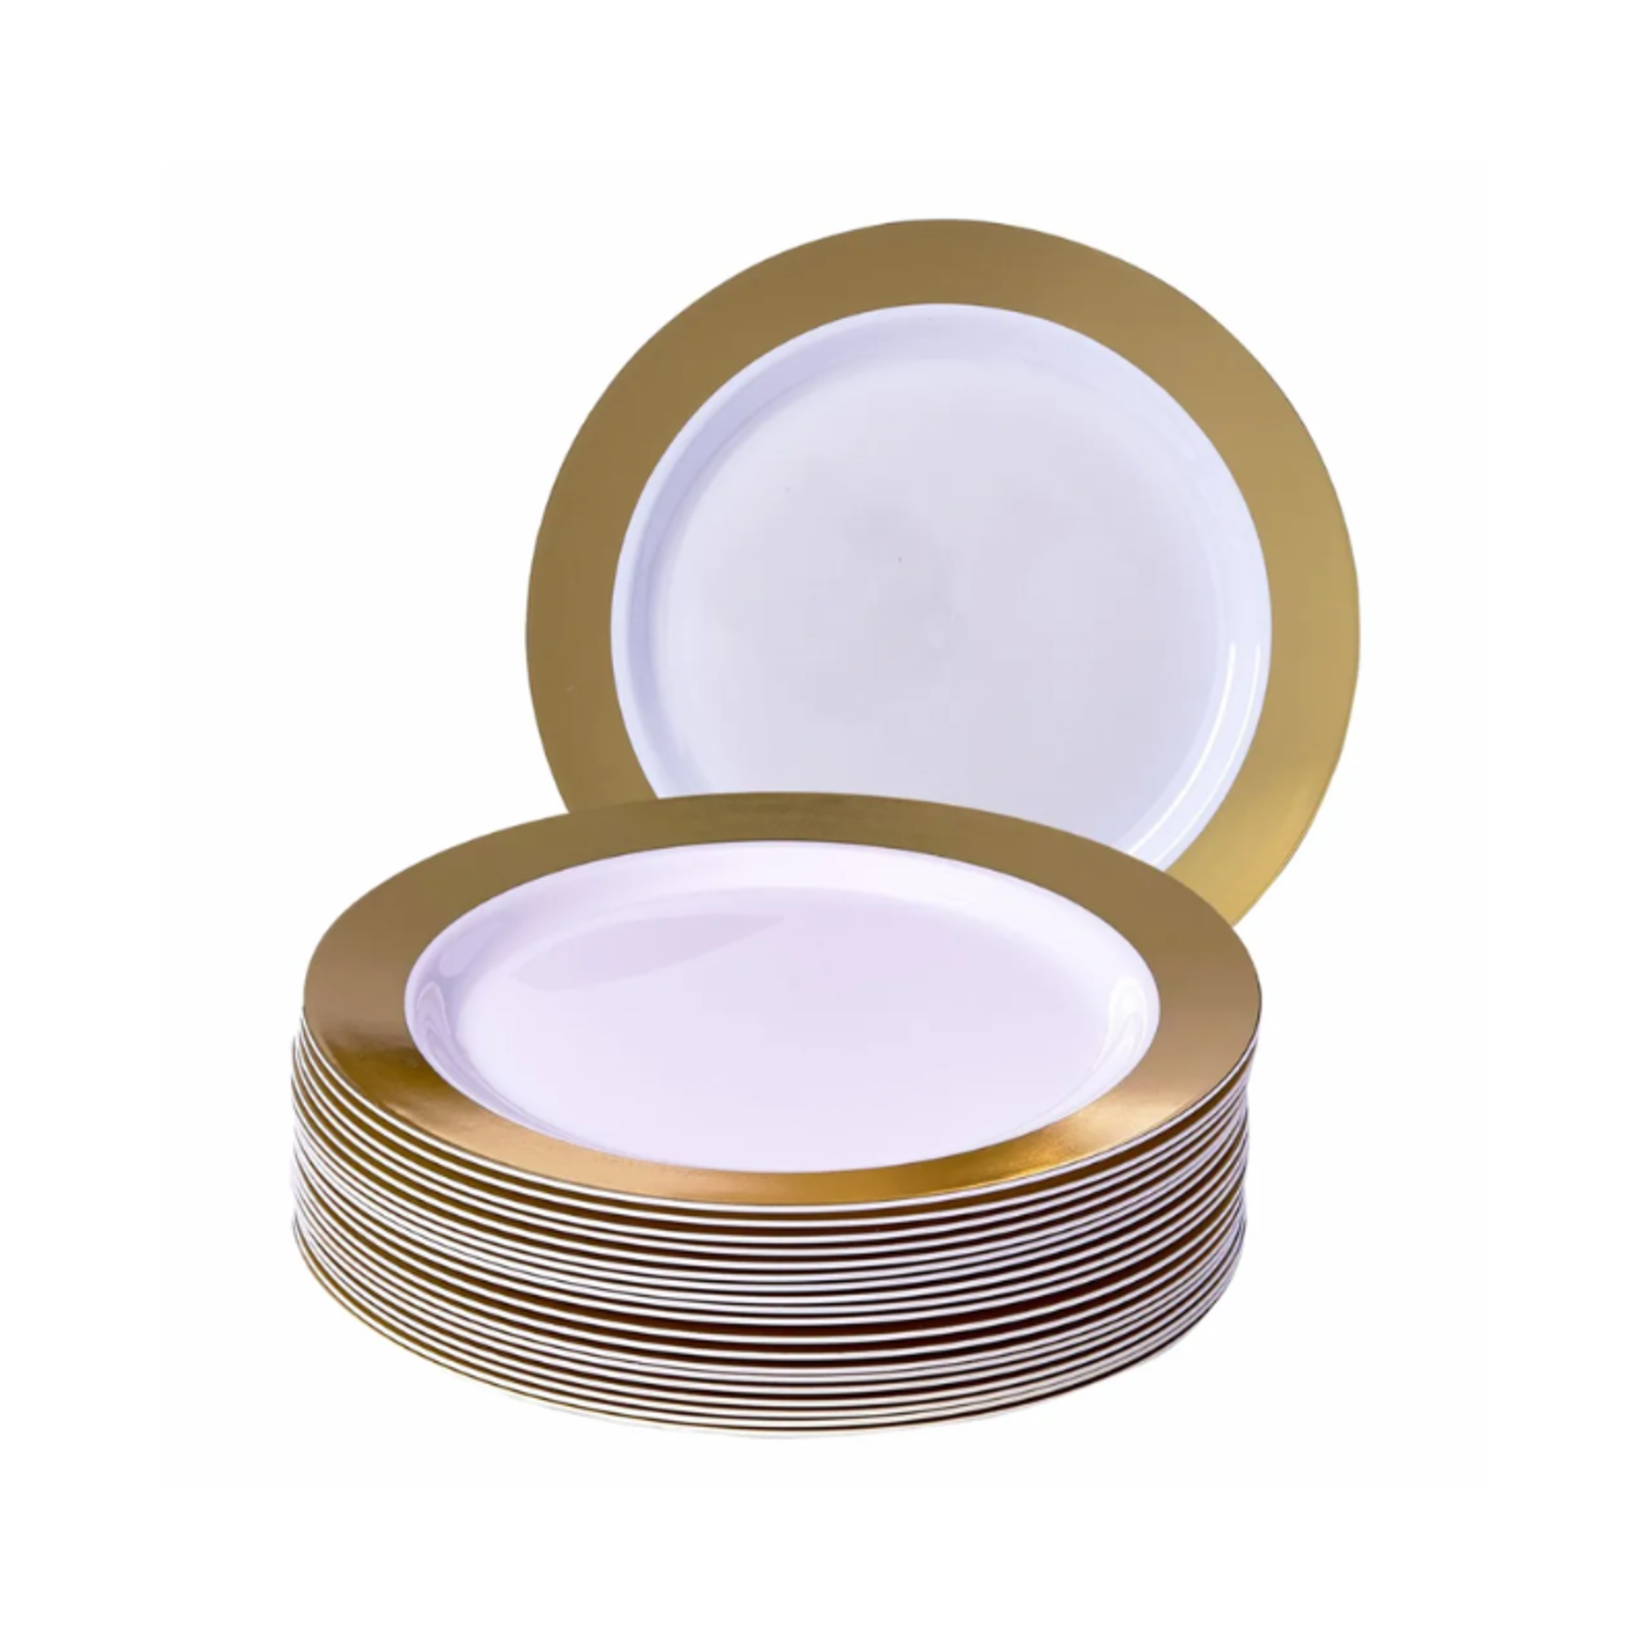 Silverspoons Ritz Gold, Dessert Plates - 10/Pack